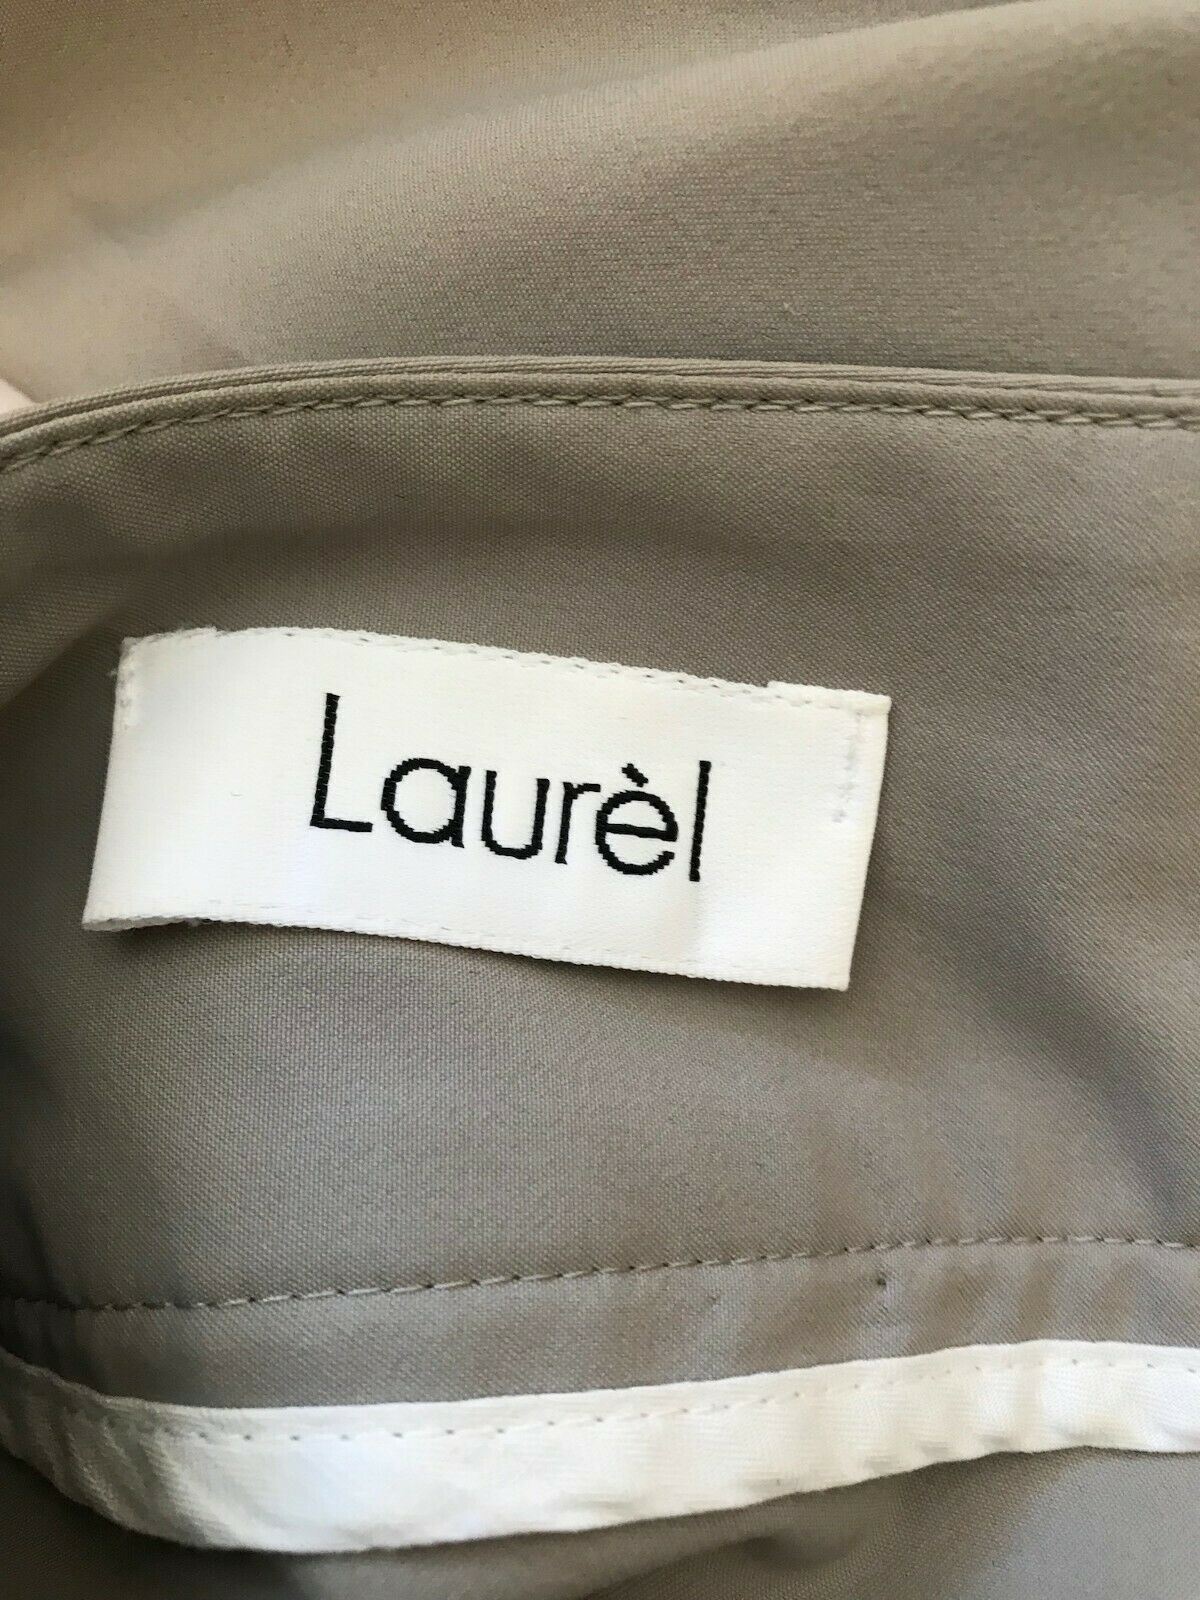 Laurel Vintage Pale Khaki Lightweight Trousers UK 10 US 6 EU 38 Timeless Fashions